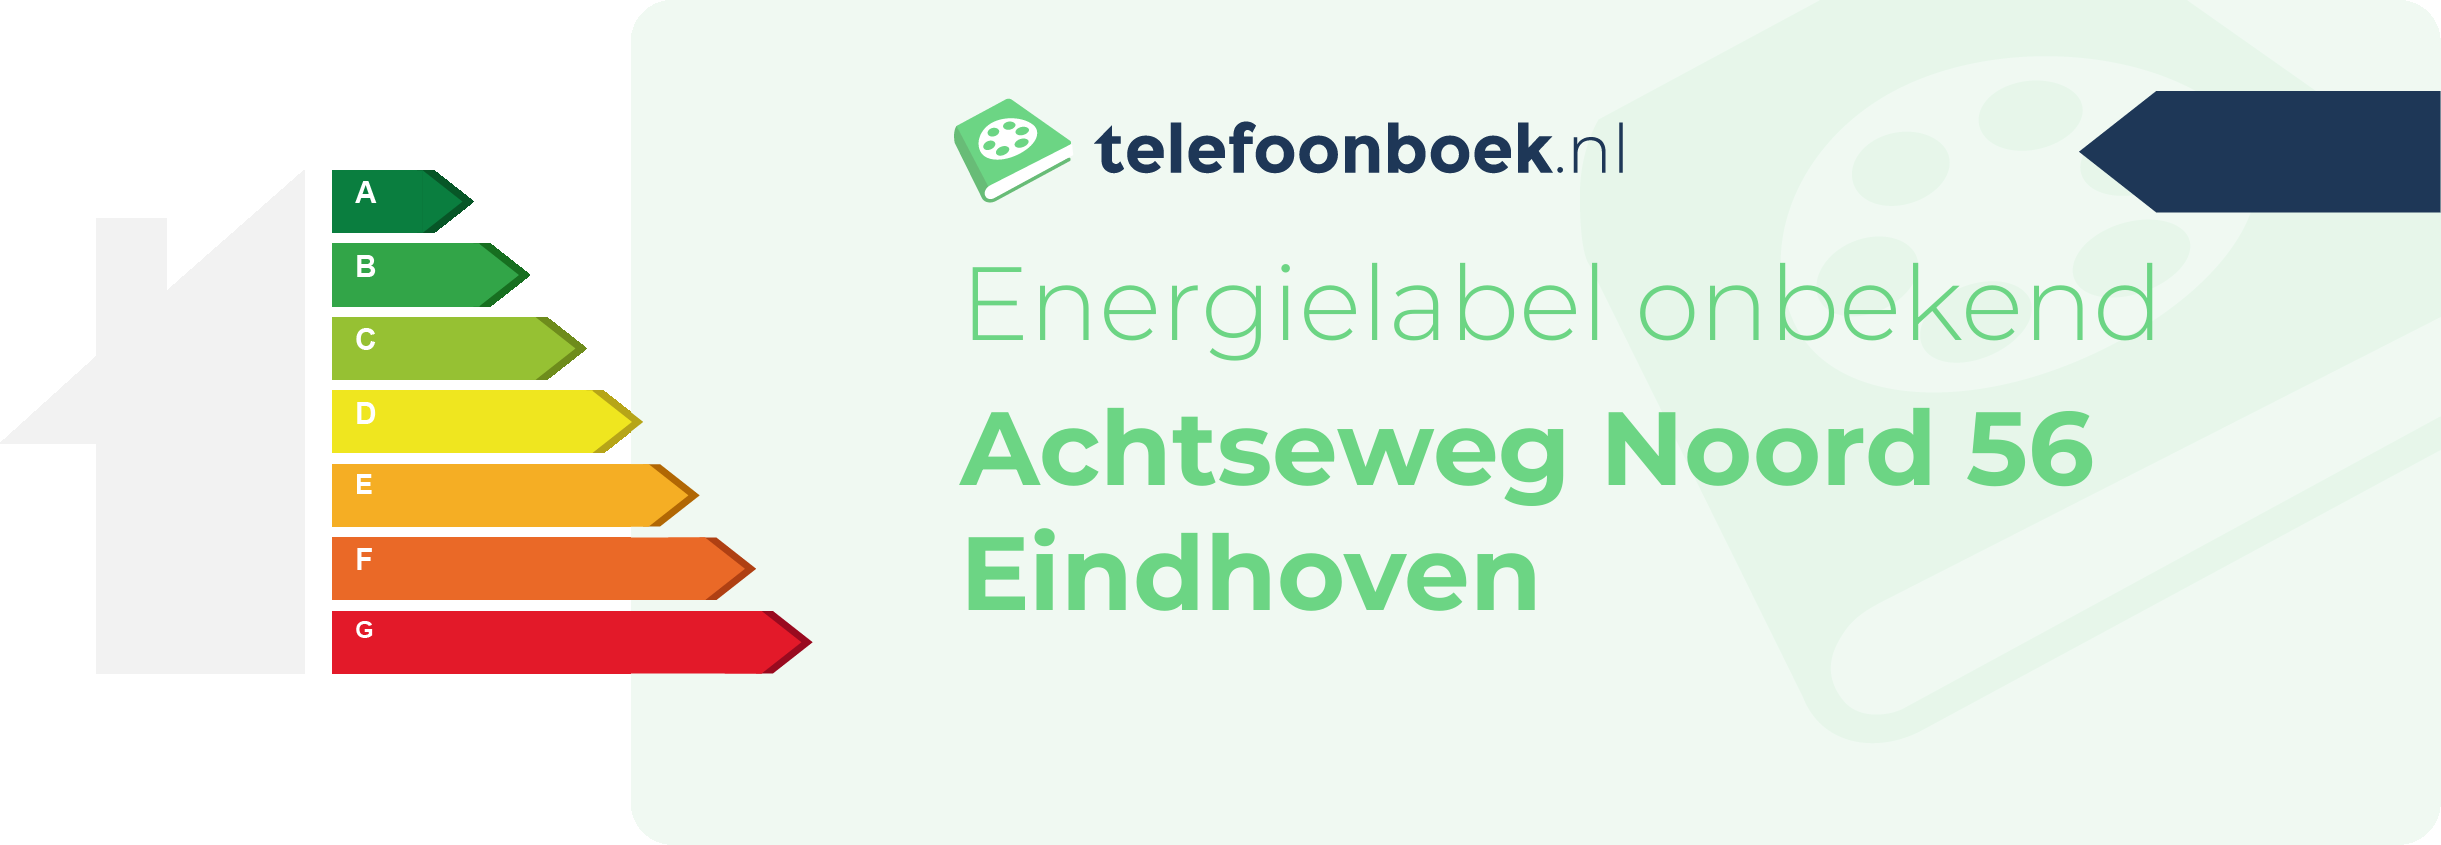 Energielabel Achtseweg Noord 56 Eindhoven